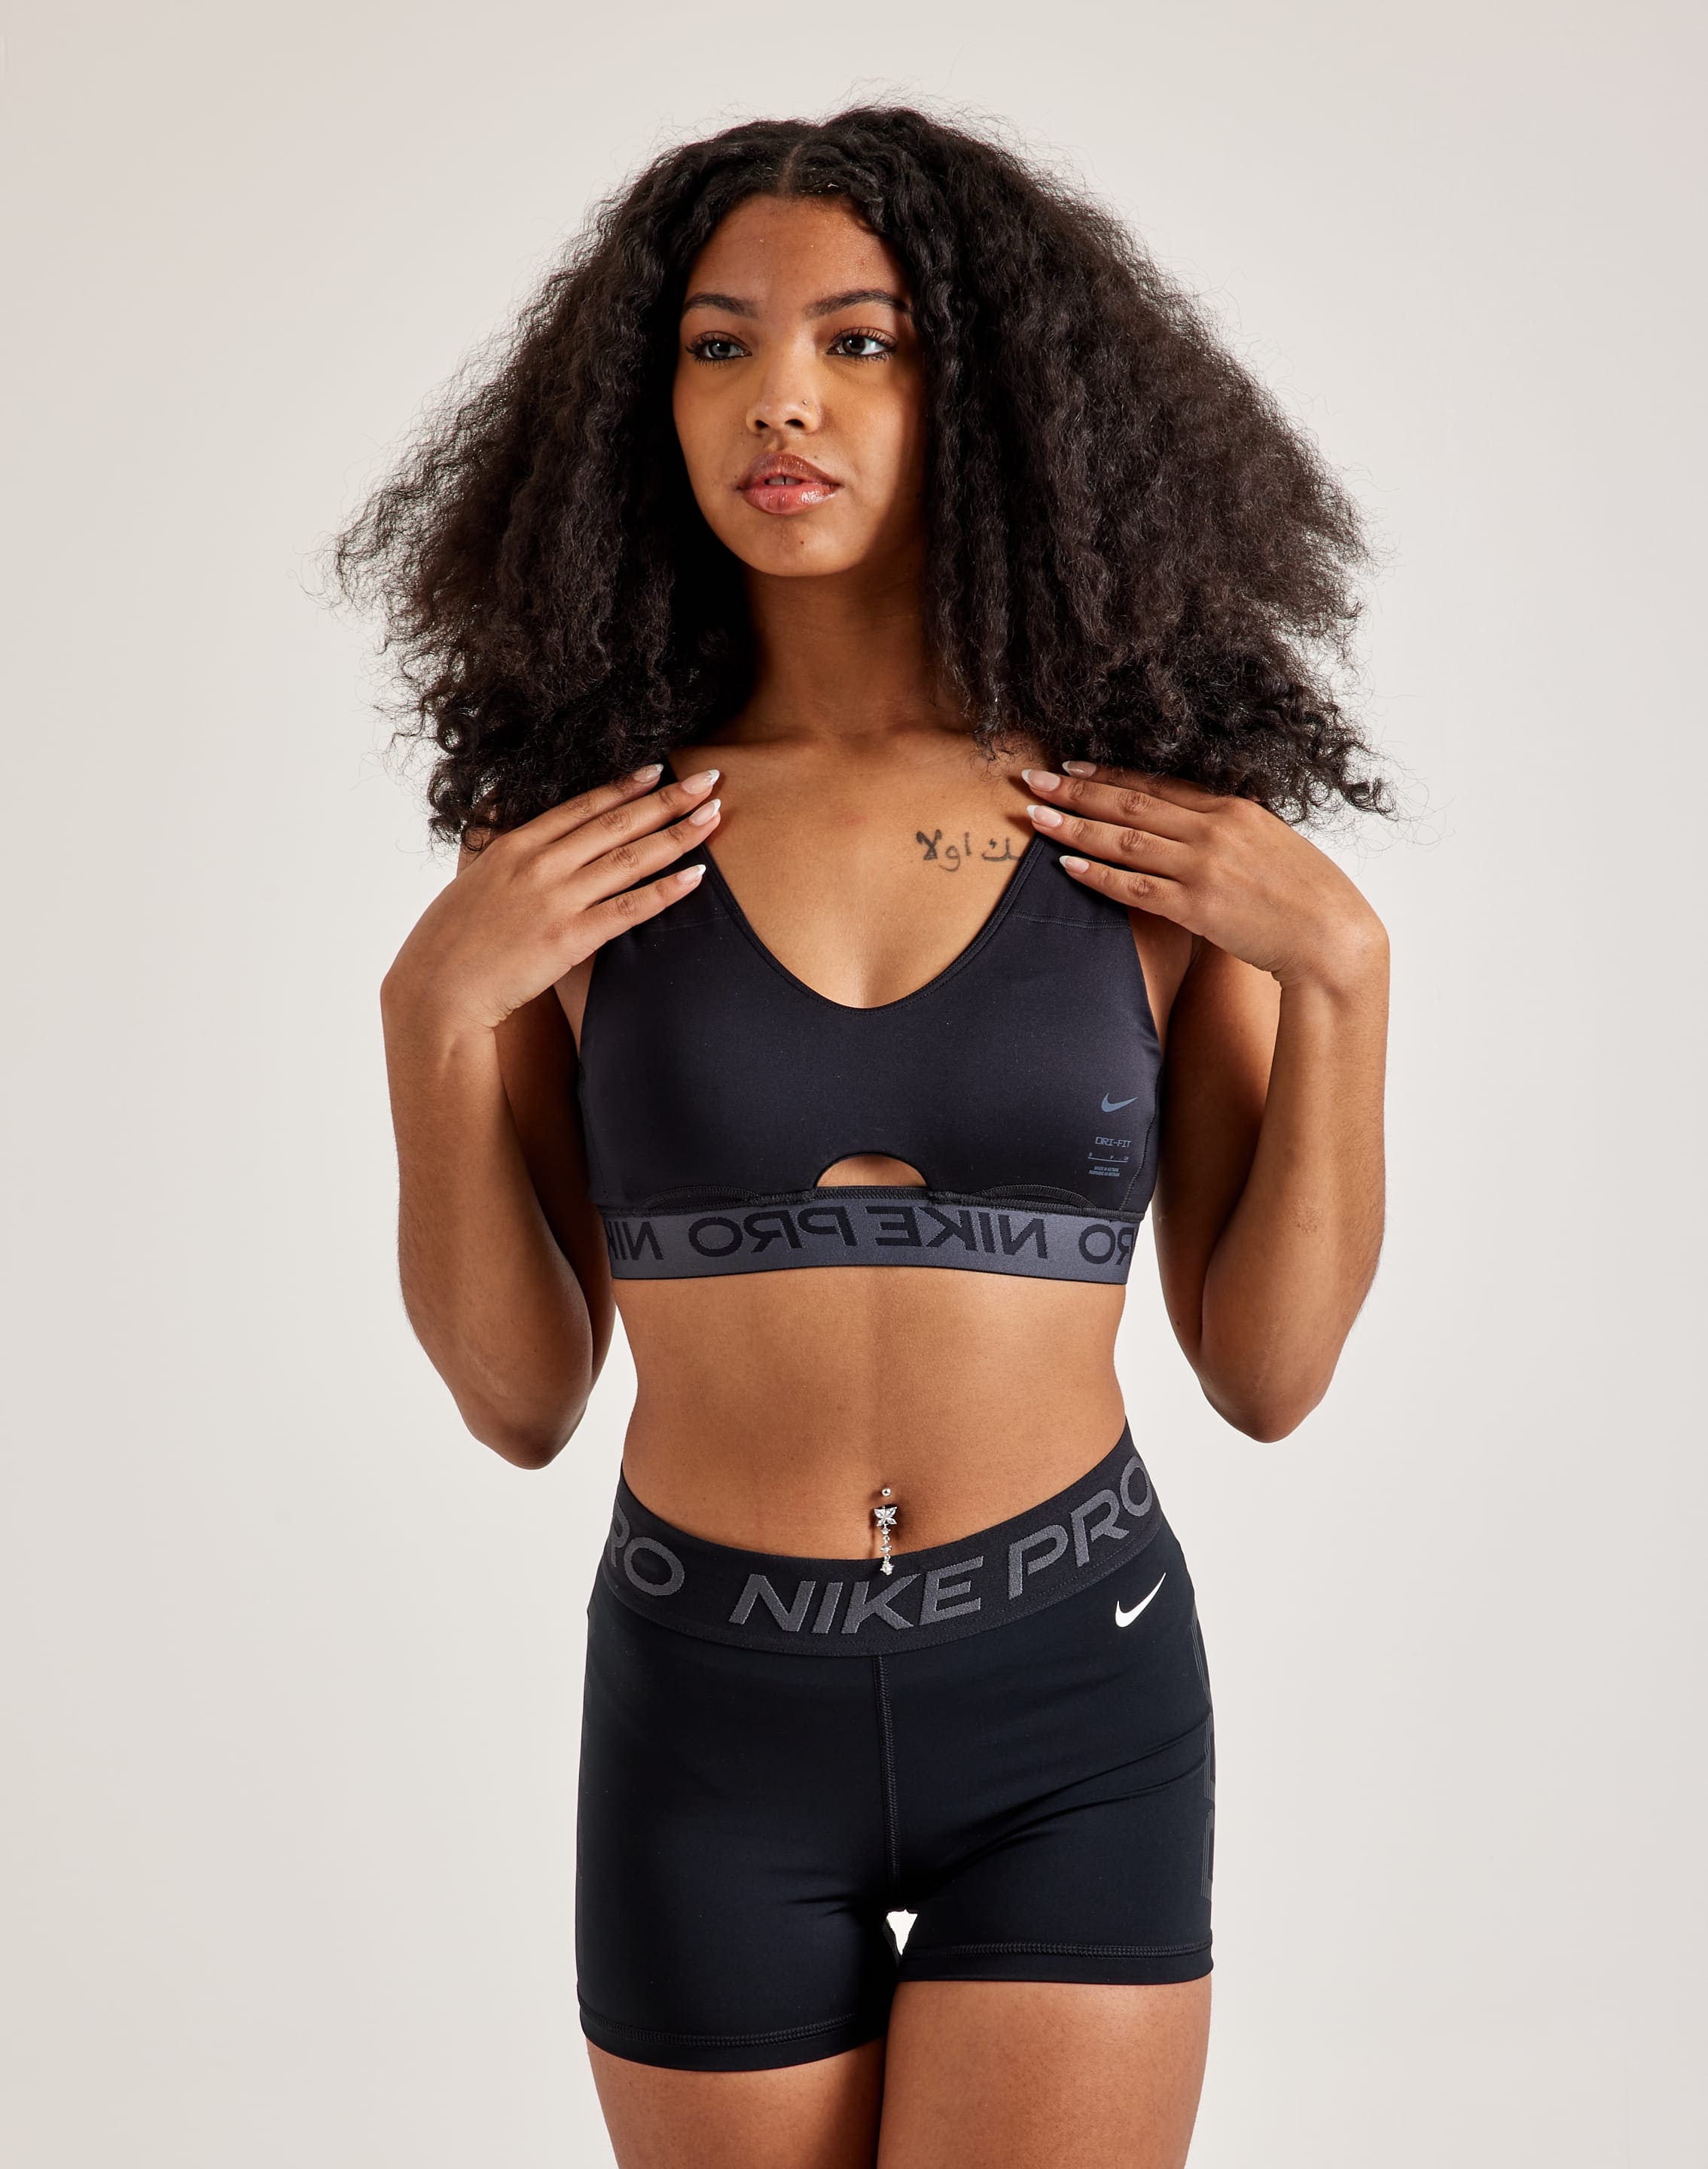 Nike womens sports bra bundle